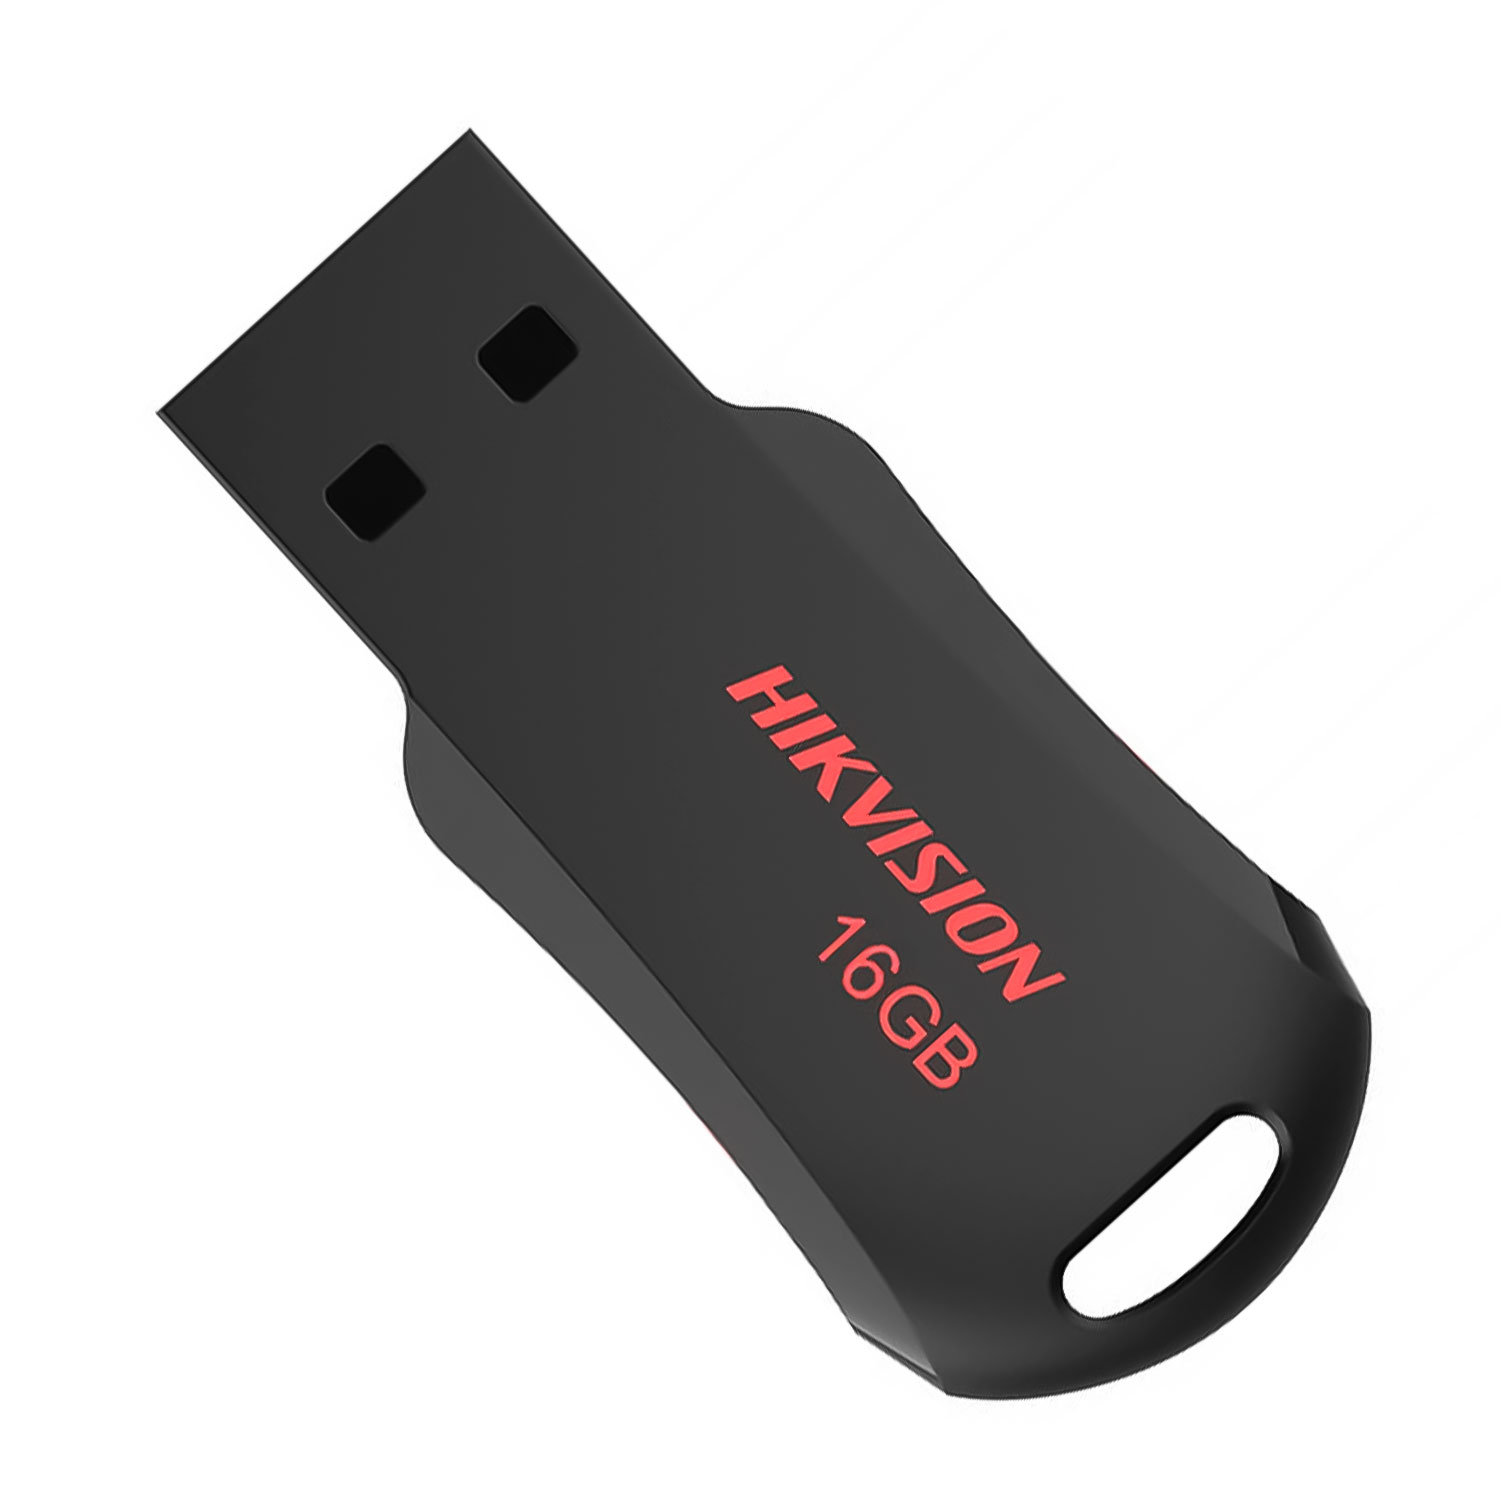 Pendrive Hikvision M200R 16GB USB 2.0 - HS-USB-M200R